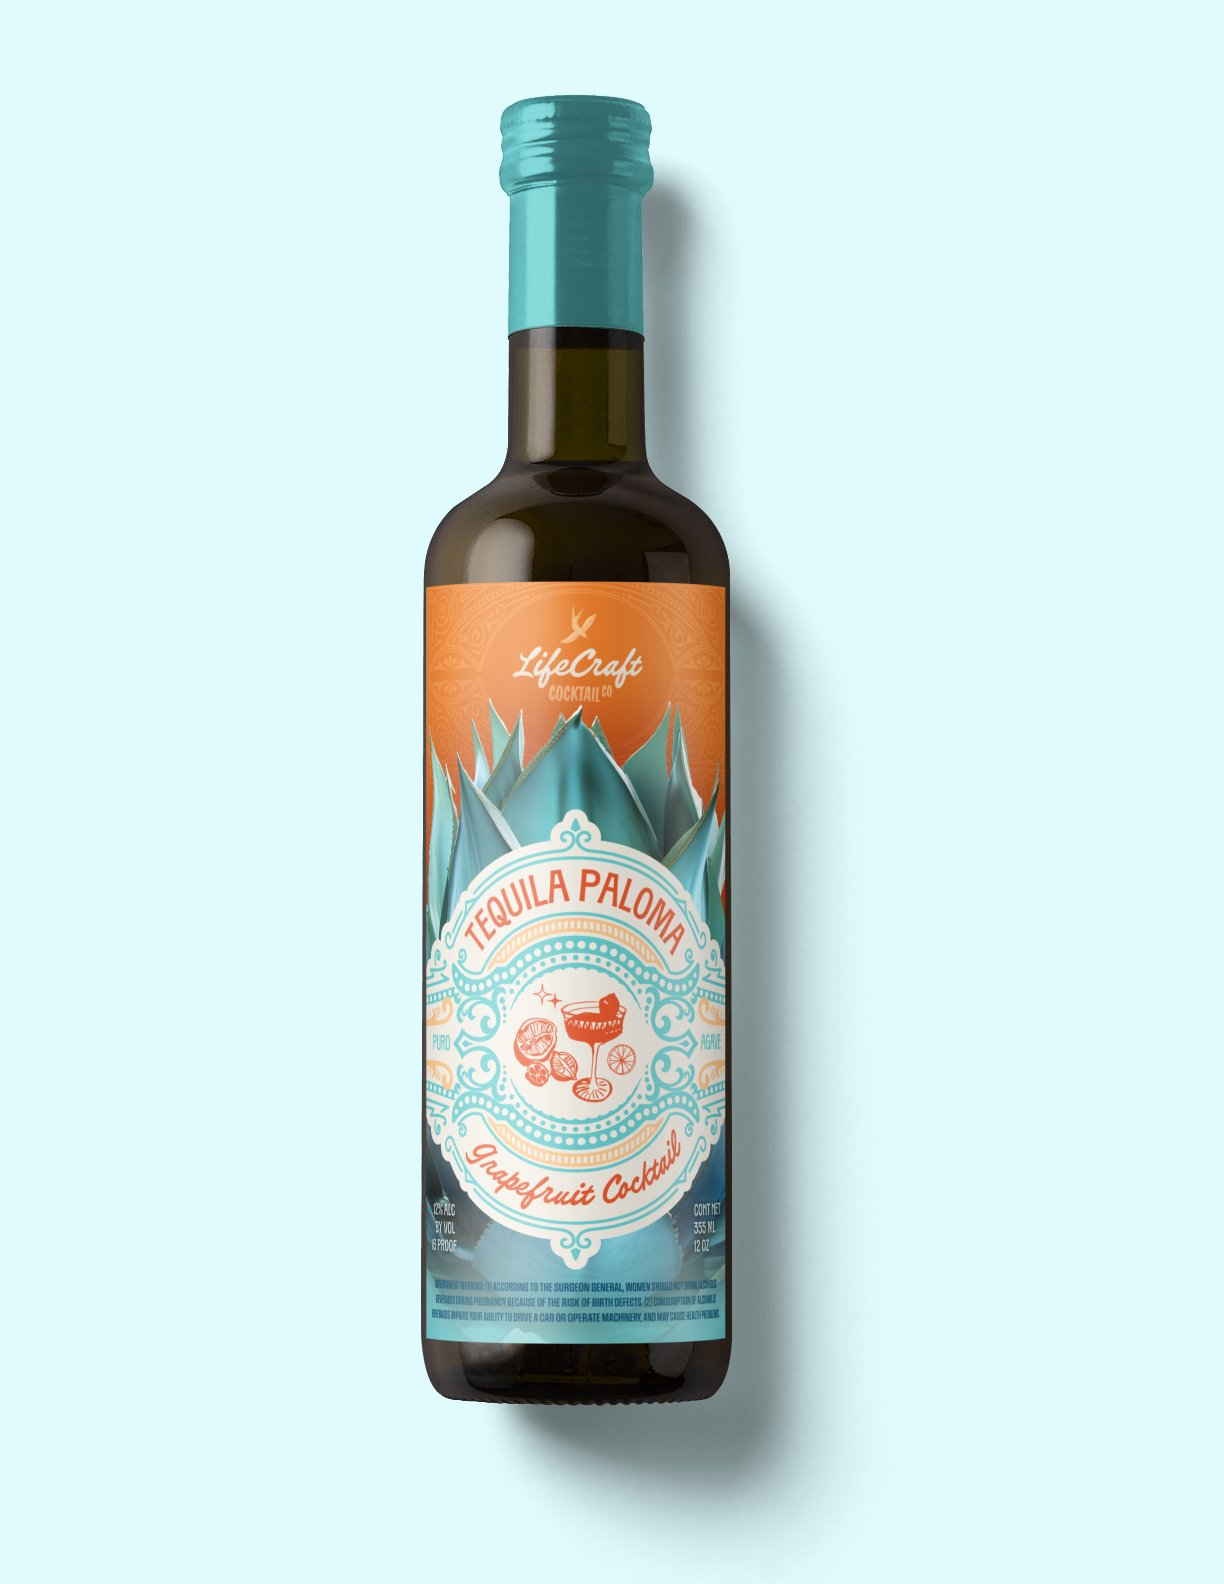 Alcoholic beverage label packaging design creative design graphic designer<br />
